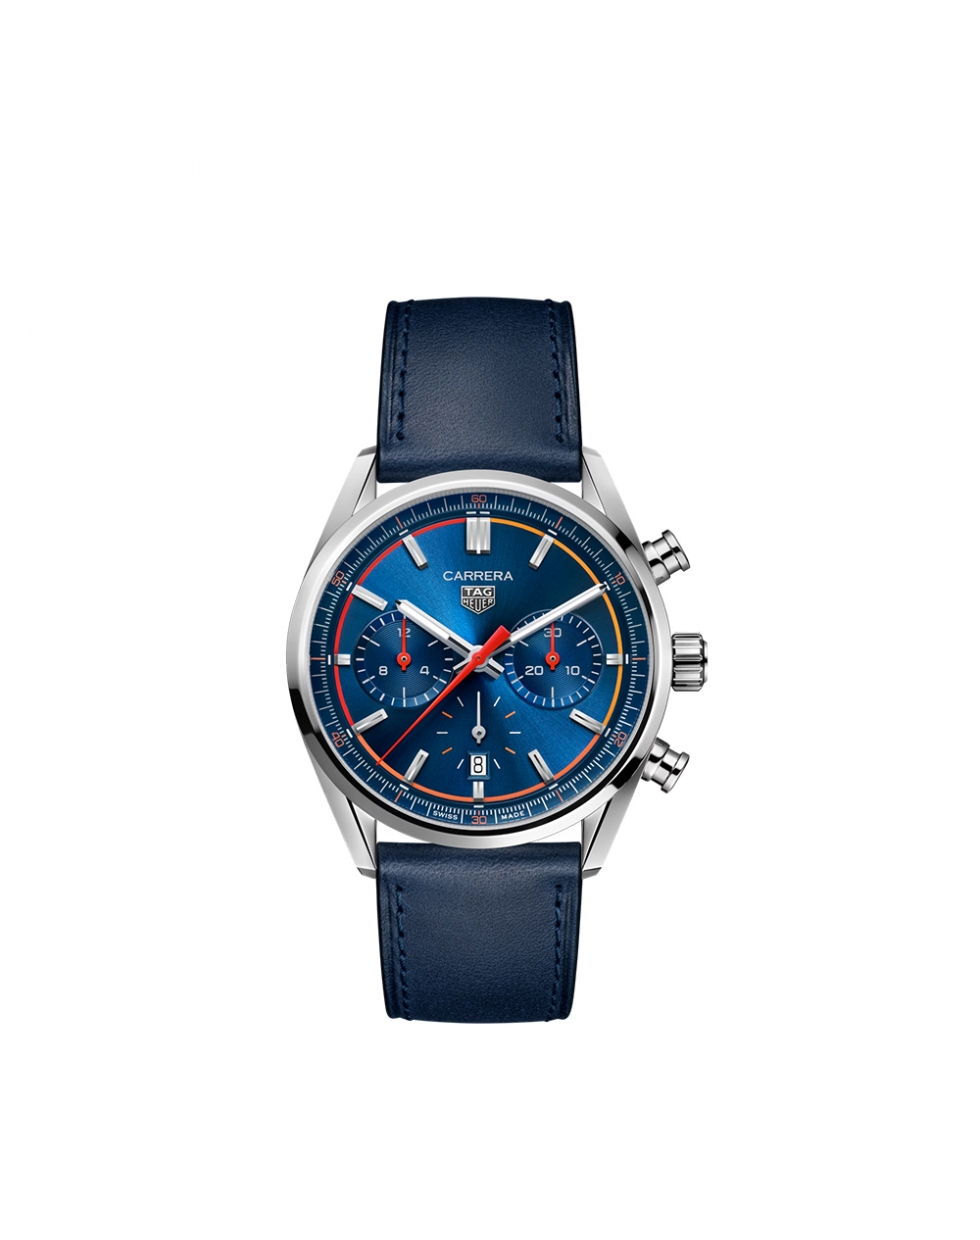 Montre TAG Heuer Carrera Chronograph automatique cadran bleu bracelet cuir bleu 42 mm